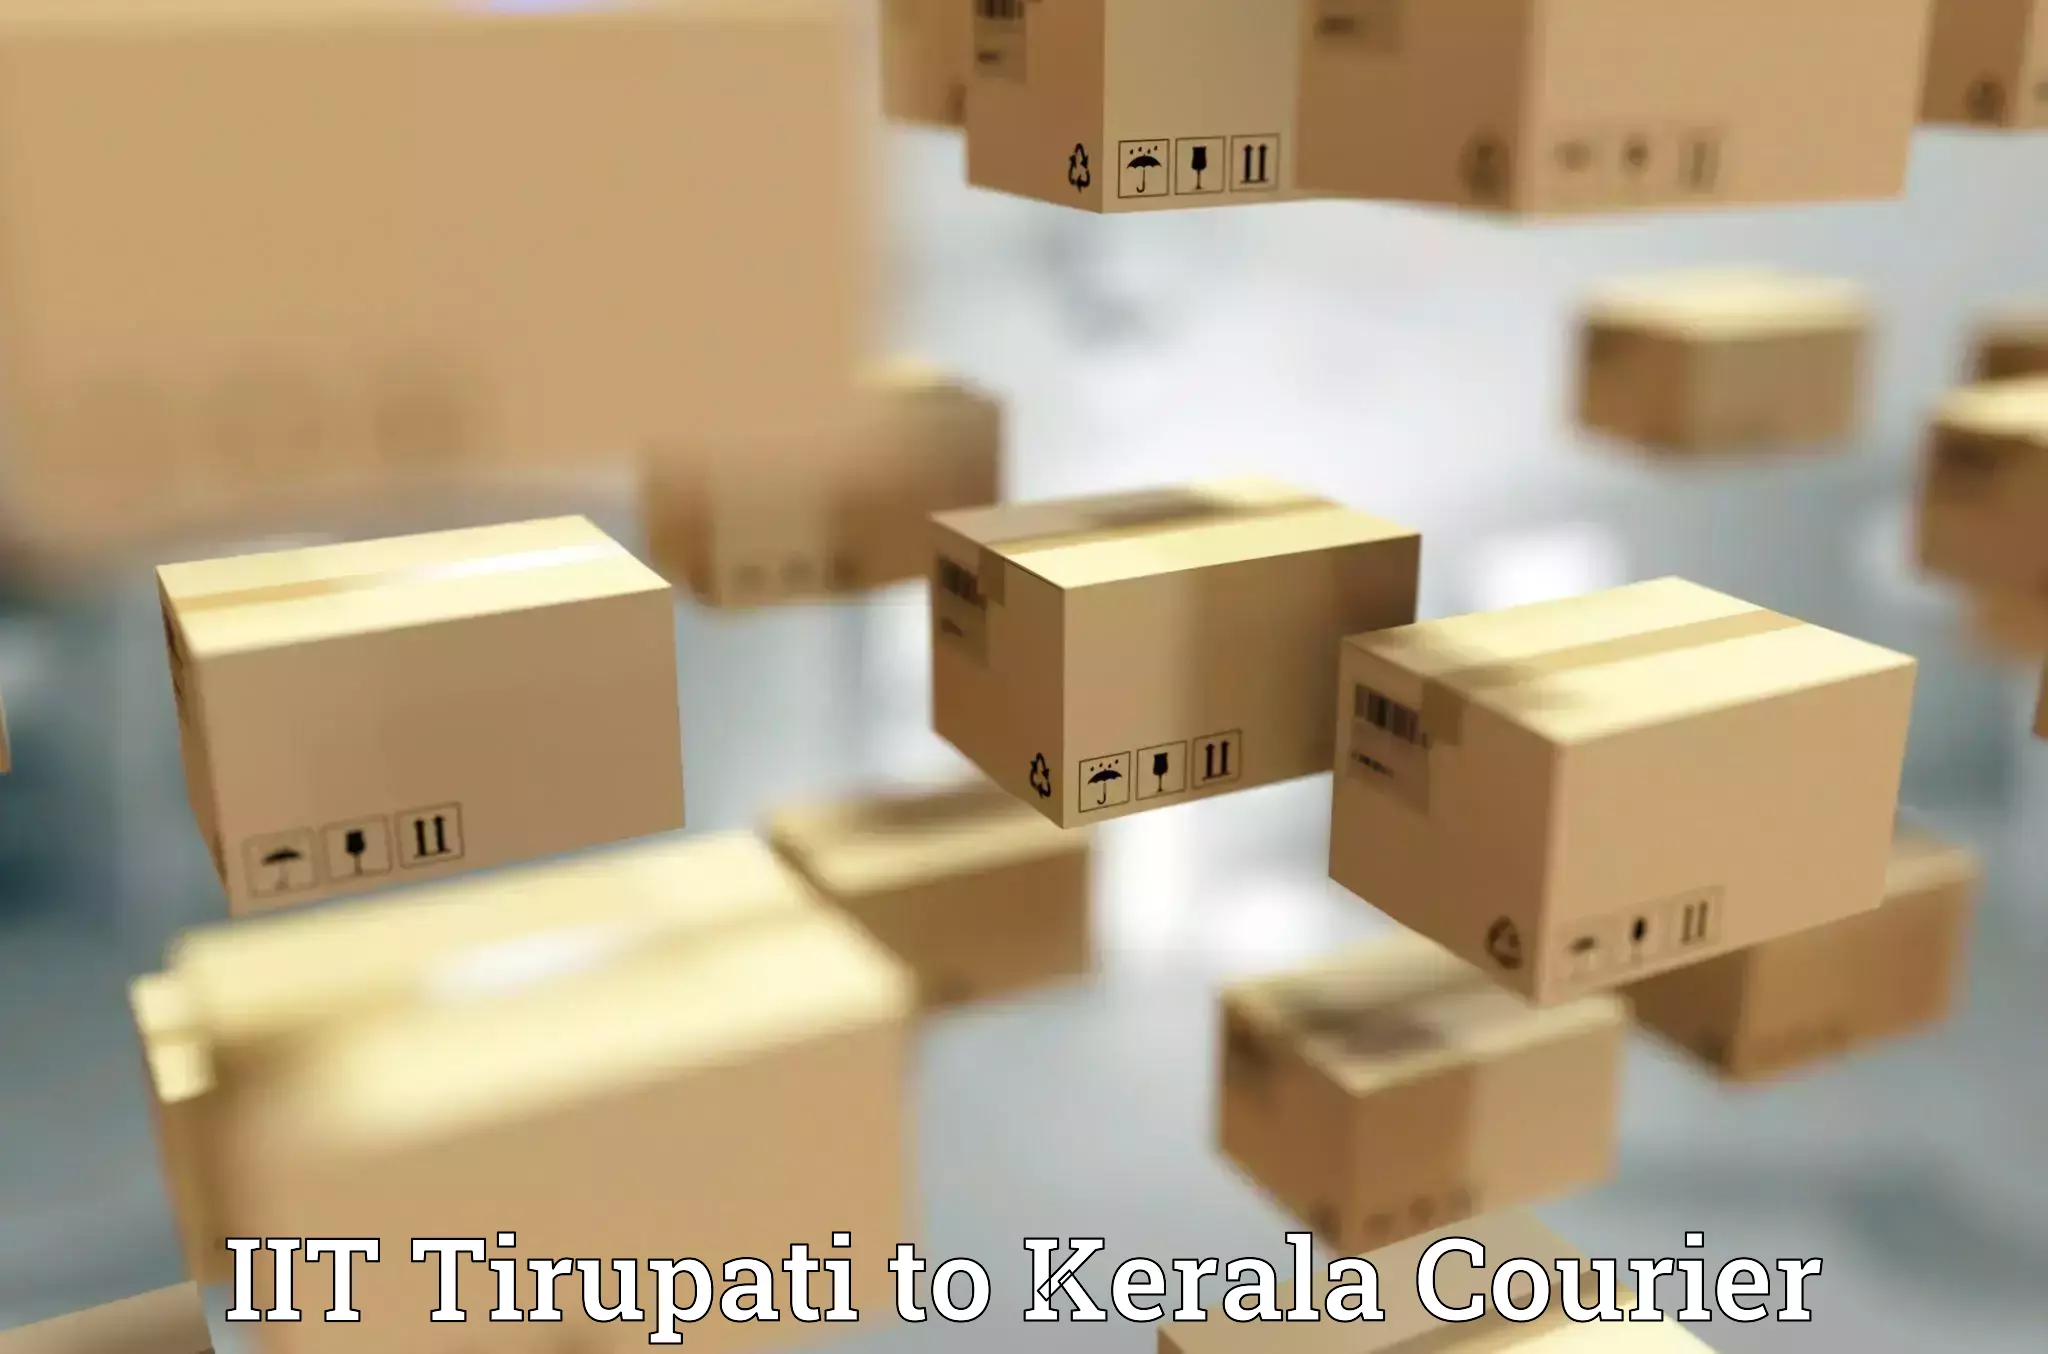 Express delivery capabilities IIT Tirupati to Palakkad